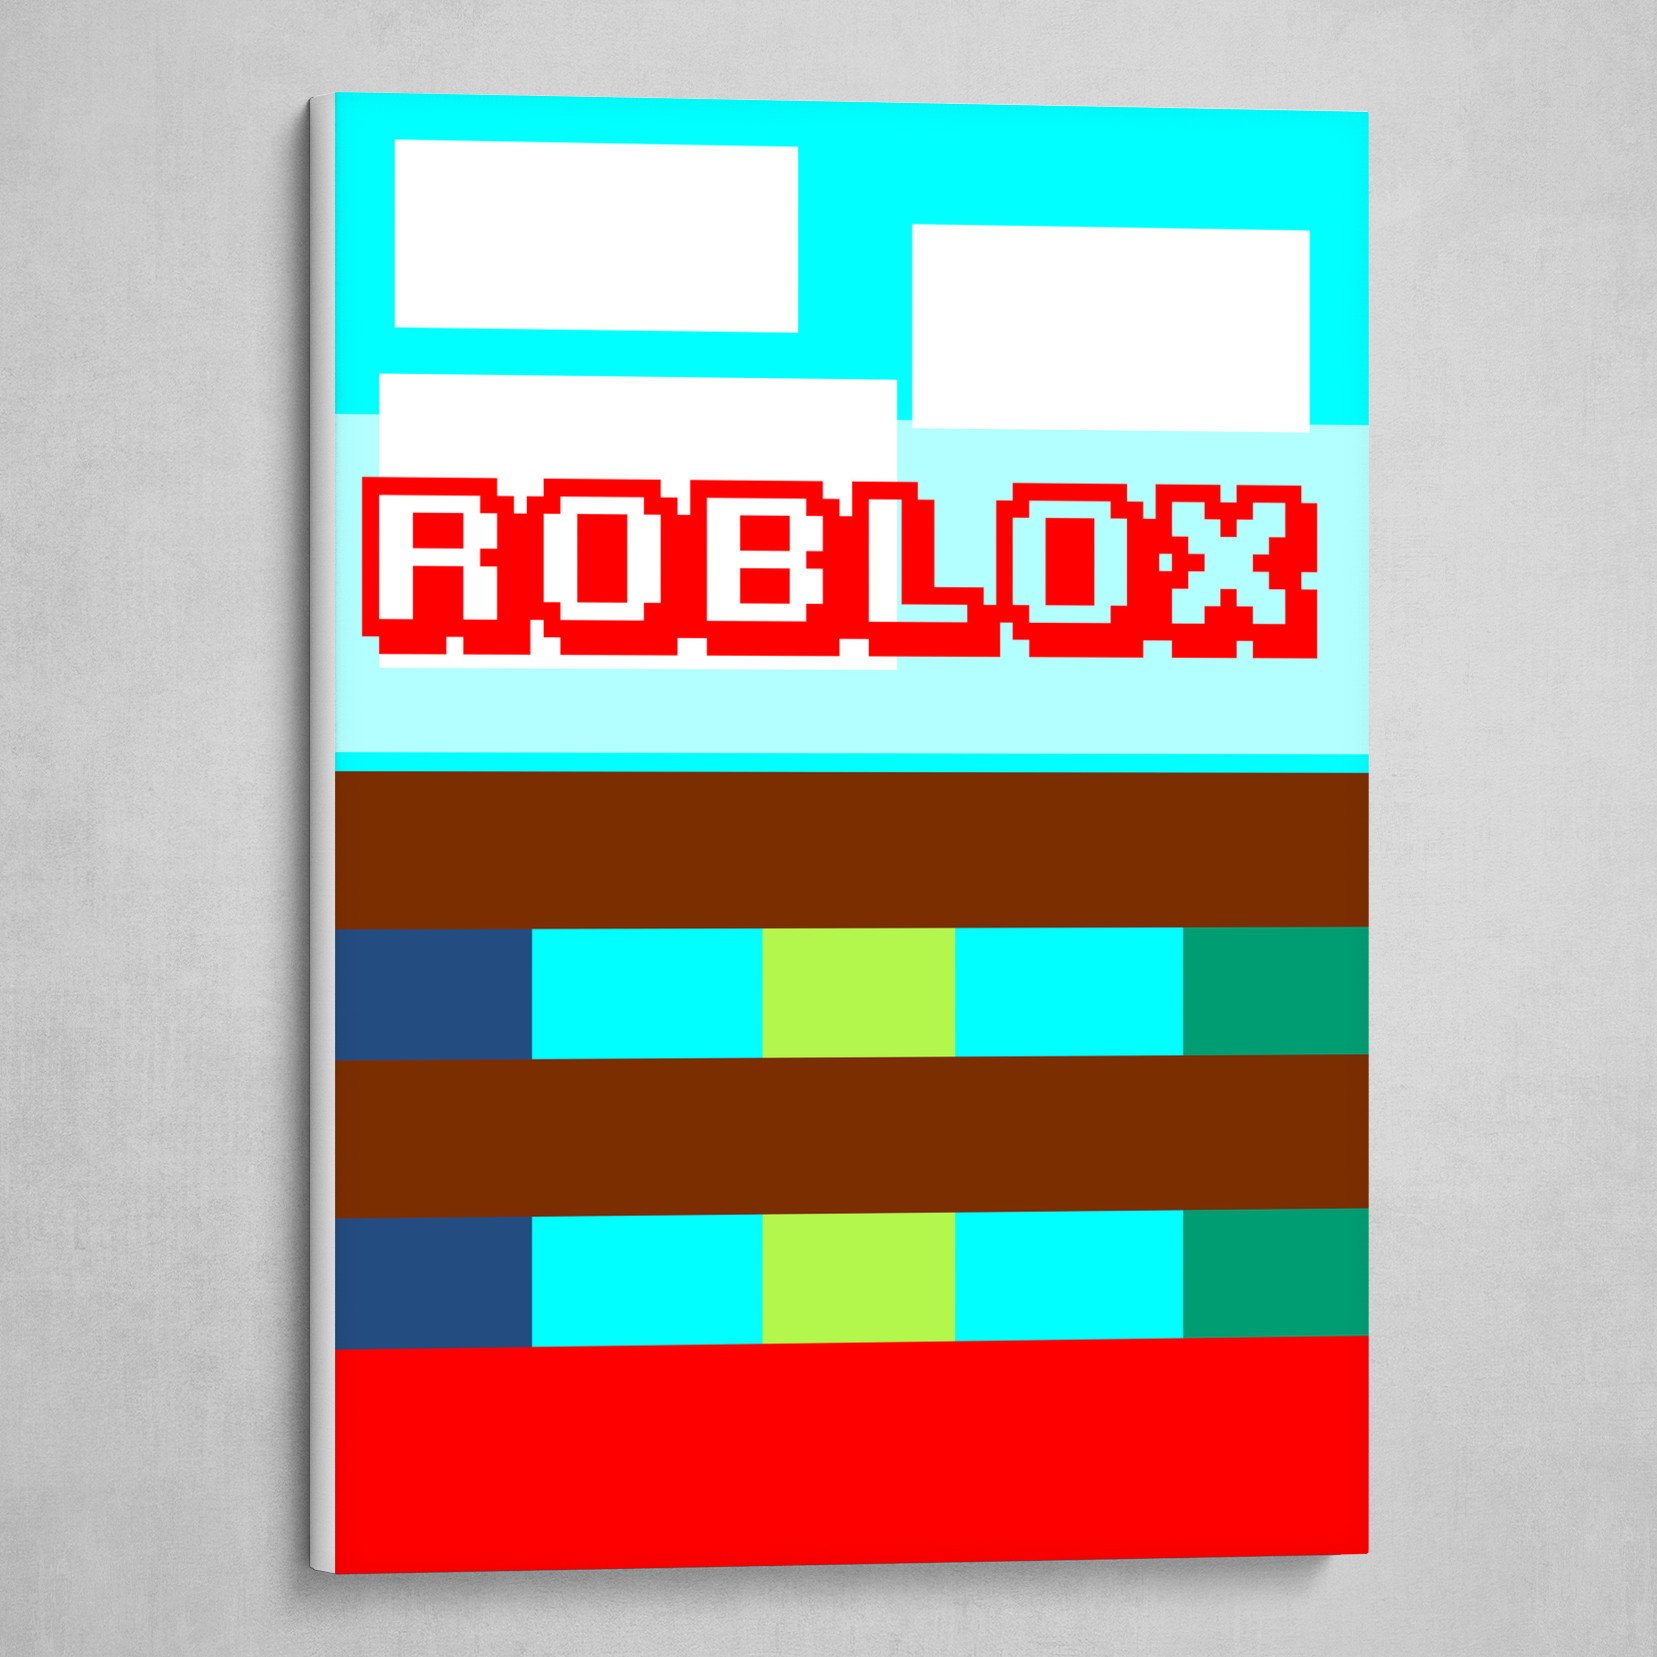 Roblox Art Print By Jonathan Larsen - roblox picture print